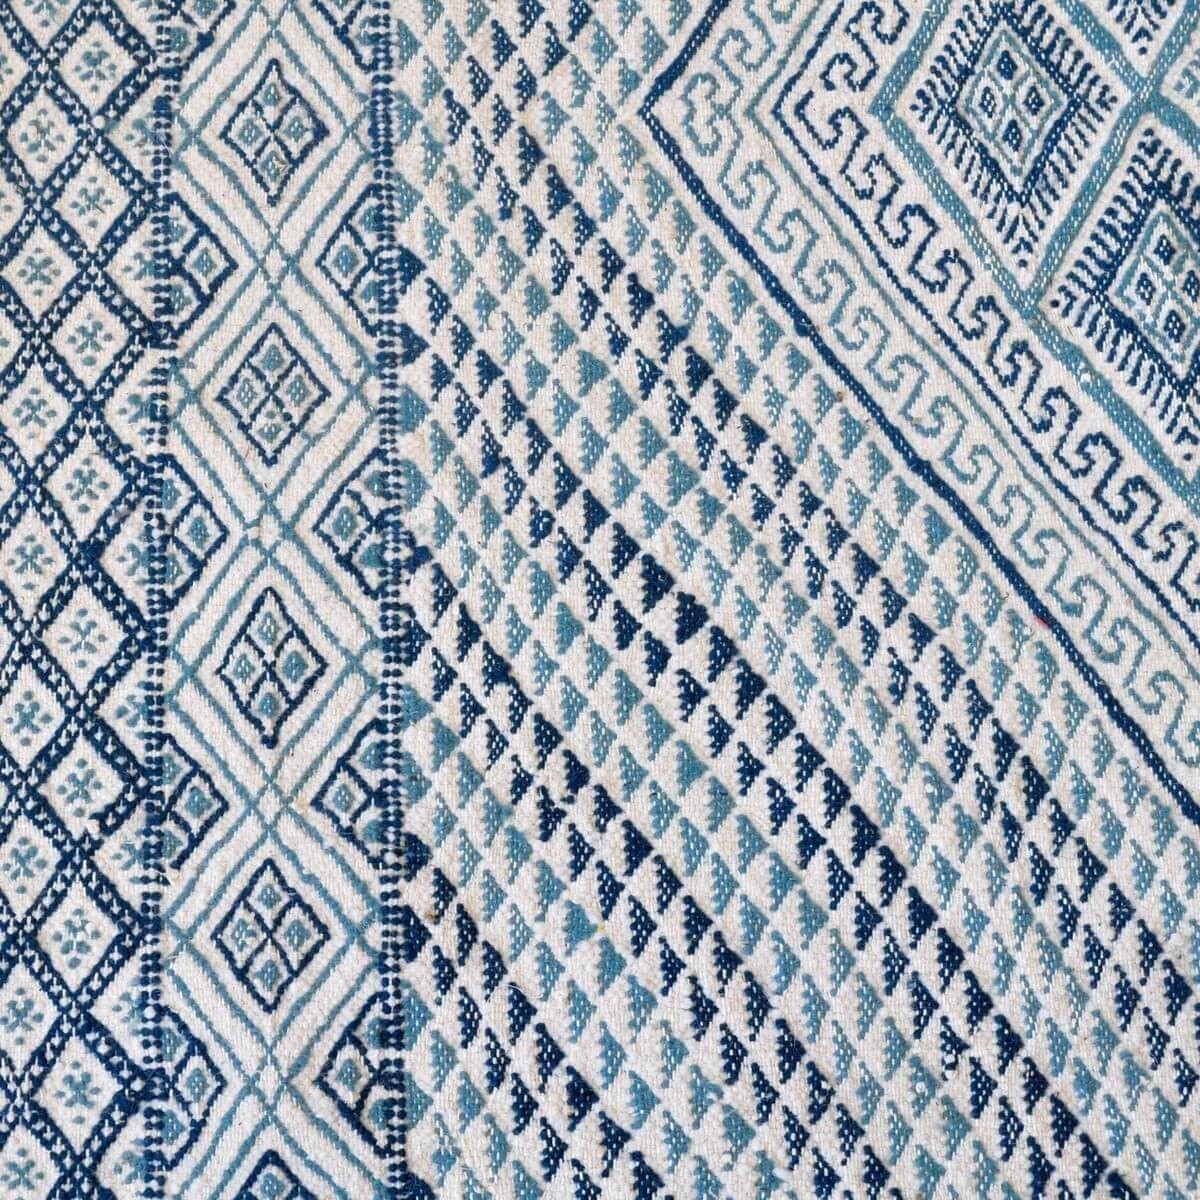 Berber carpet Large Rug Margoum Medina 198x298 Blue/White (Handmade, Wool, Tunisia) Tunisian margoum rug from the city of Kairou